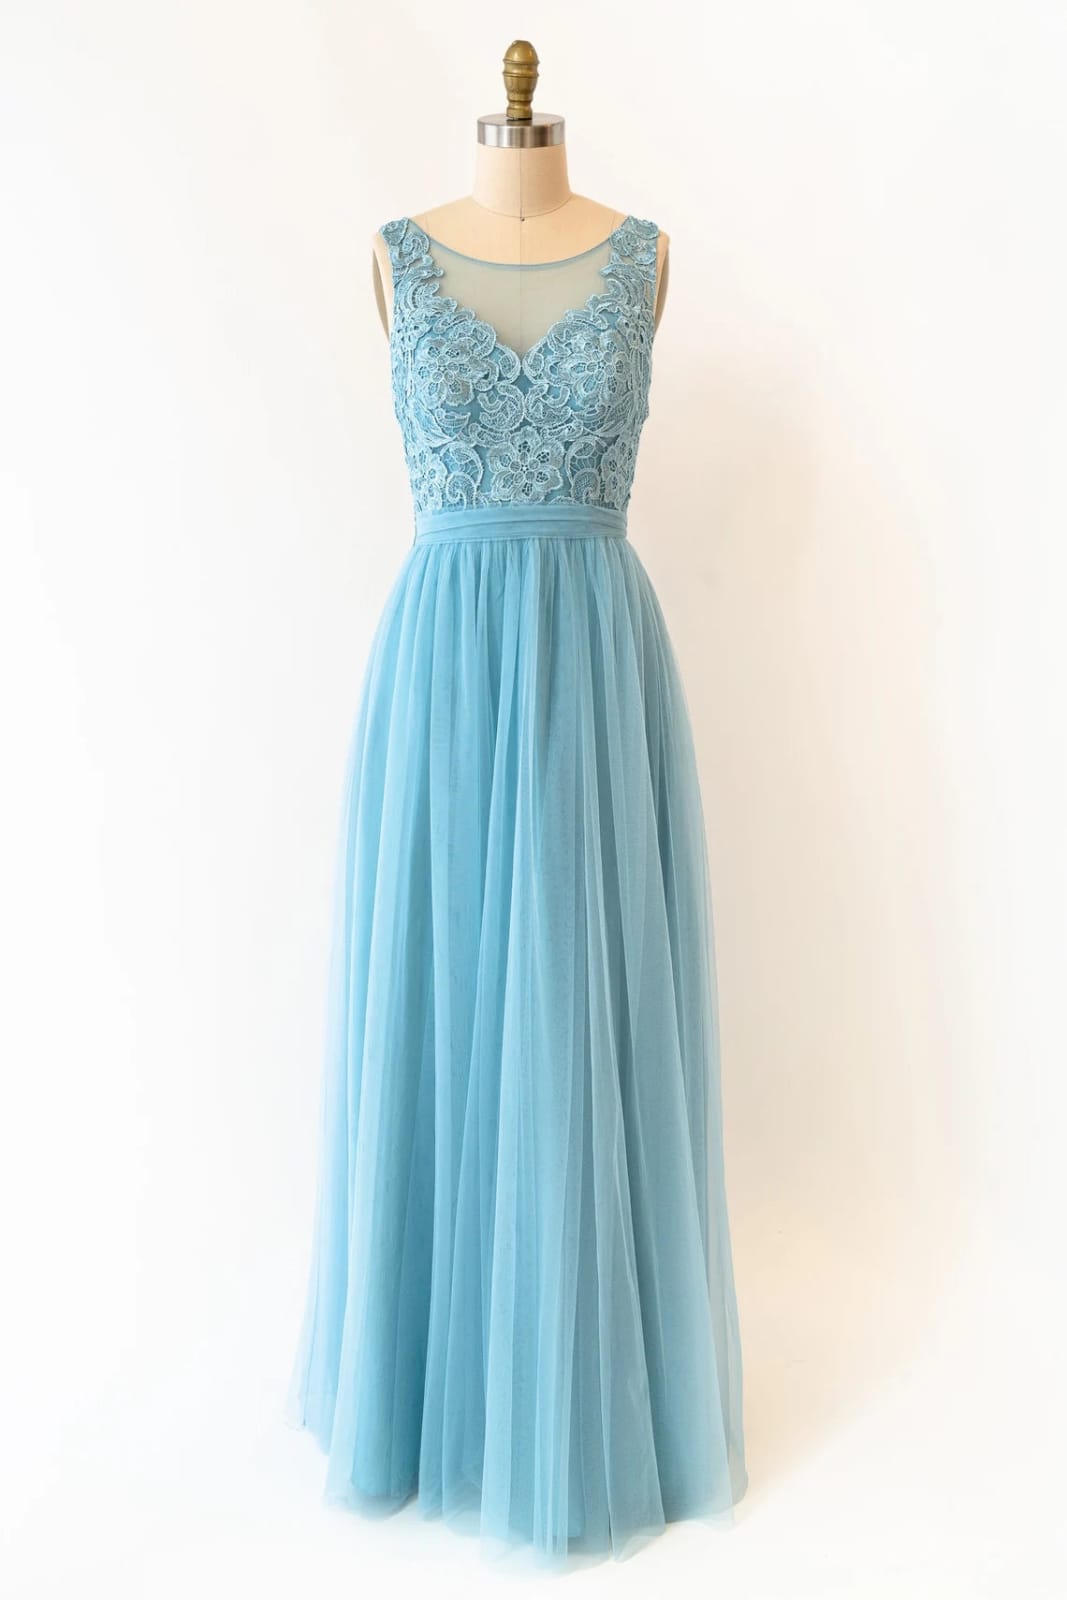 Sheer Lace Tulle Deep V Back Long Light Blue Bridesmaid Dress, Sash